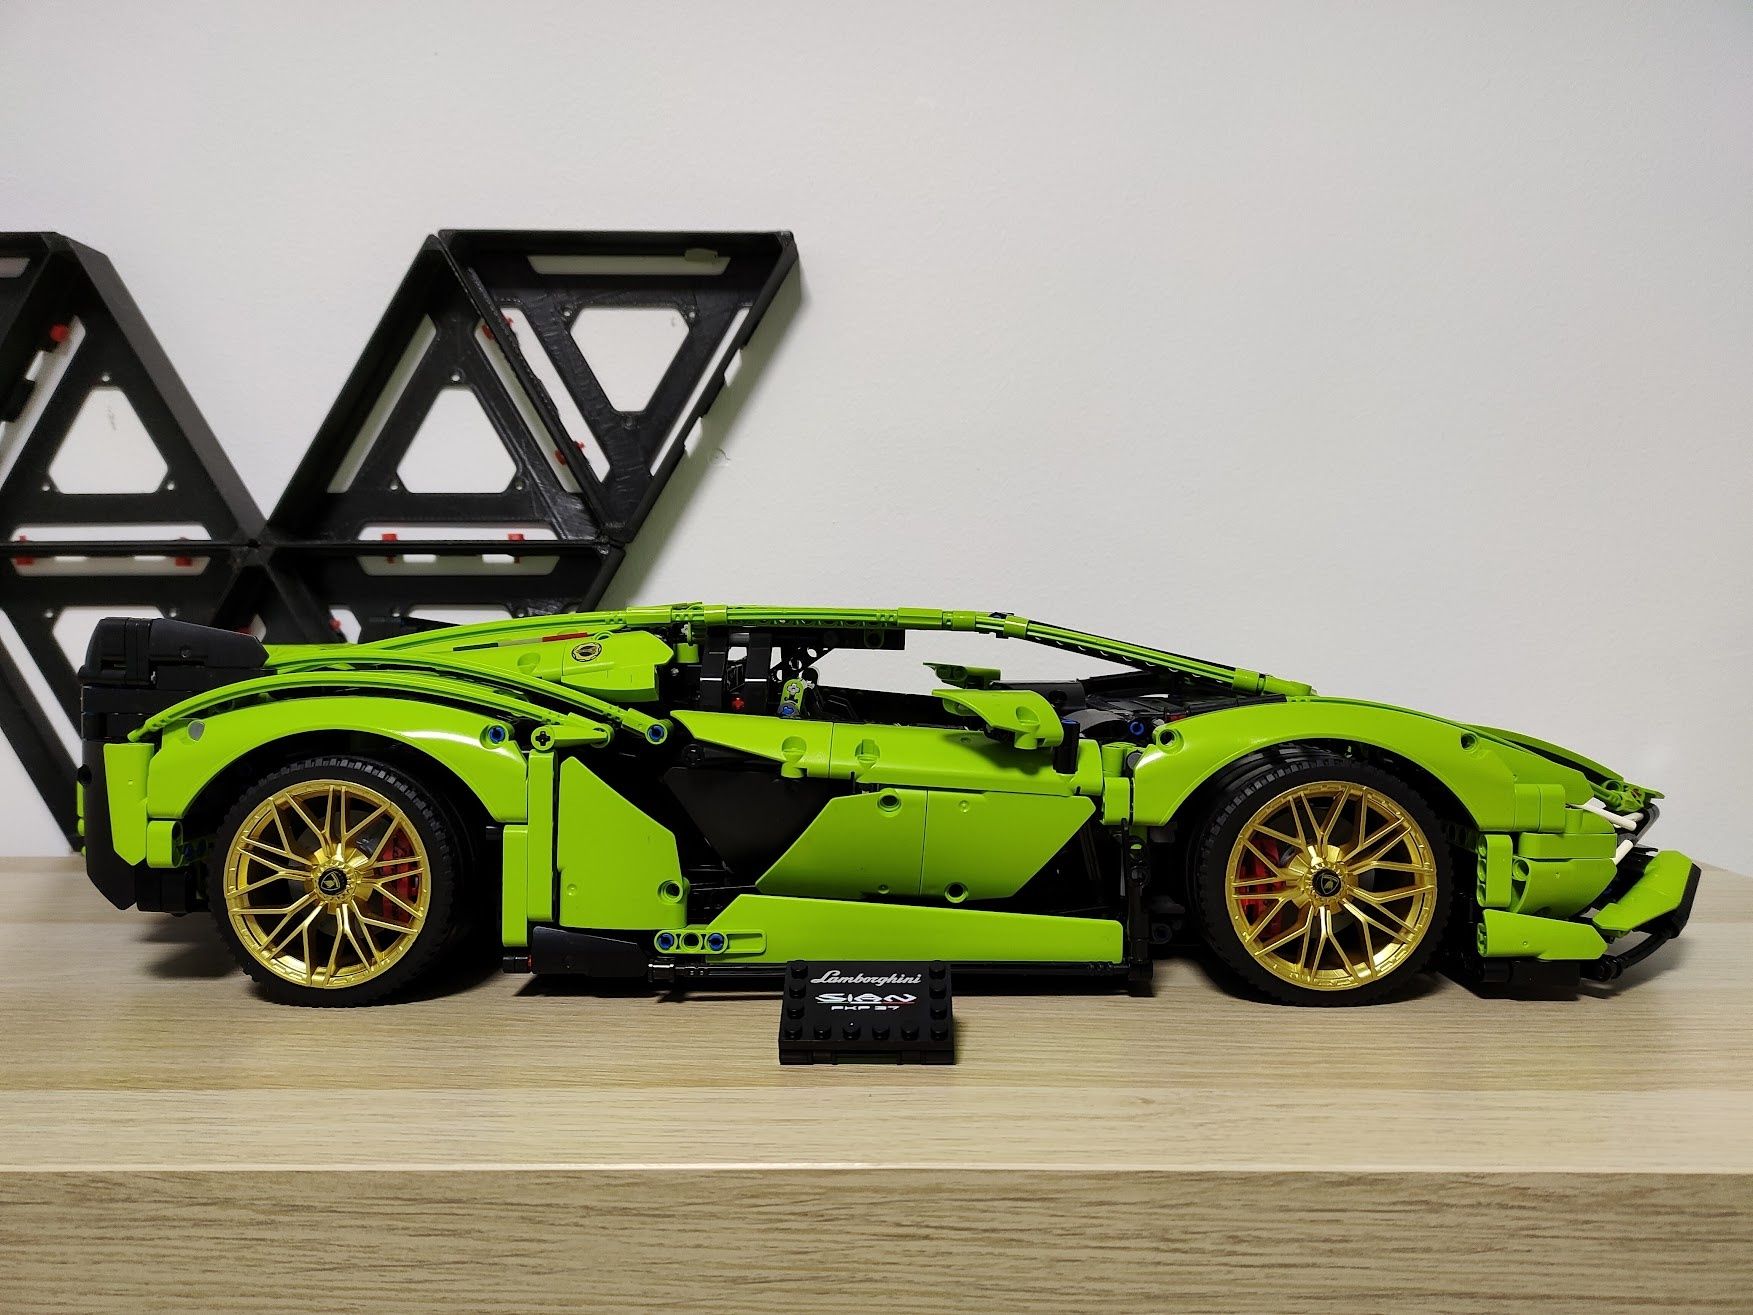 Klocki Lamborghini Sian fkp 37 model 42115 1:8  prezent zabawka